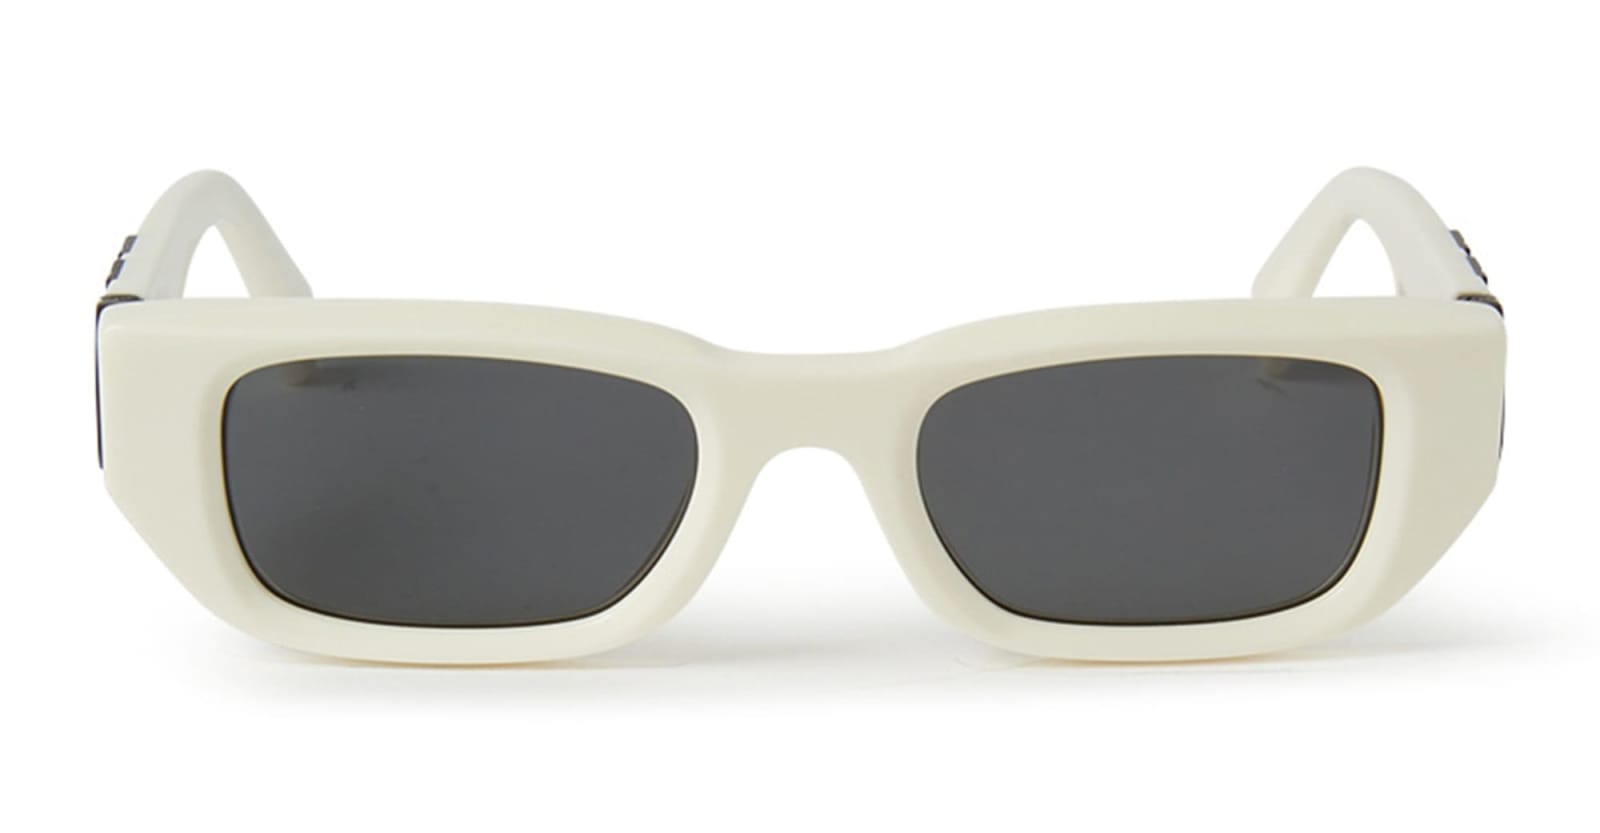 Off-white Fillmore - White / Dark Grey Sunglasses